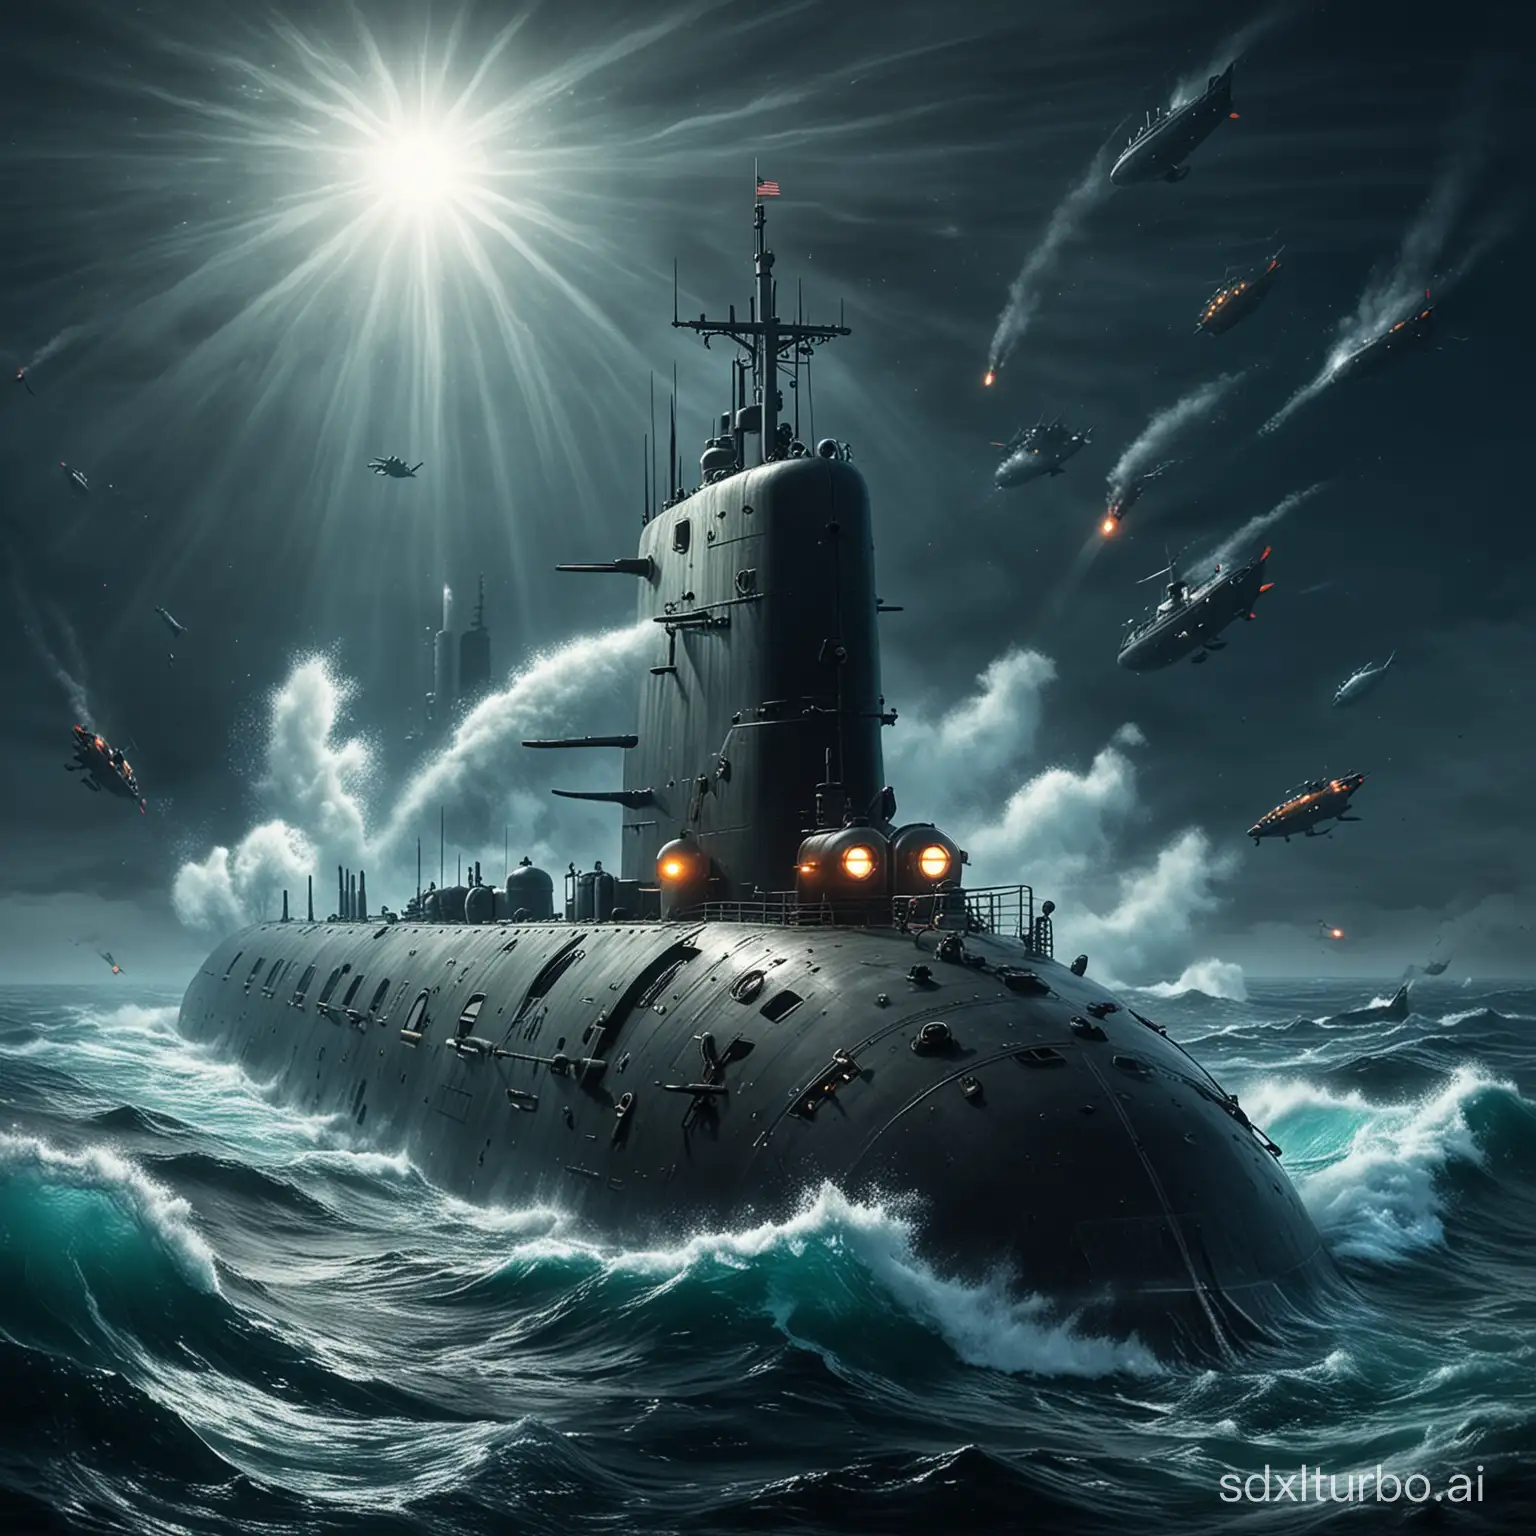 Deep sea, submarines, naval warfare, underwater